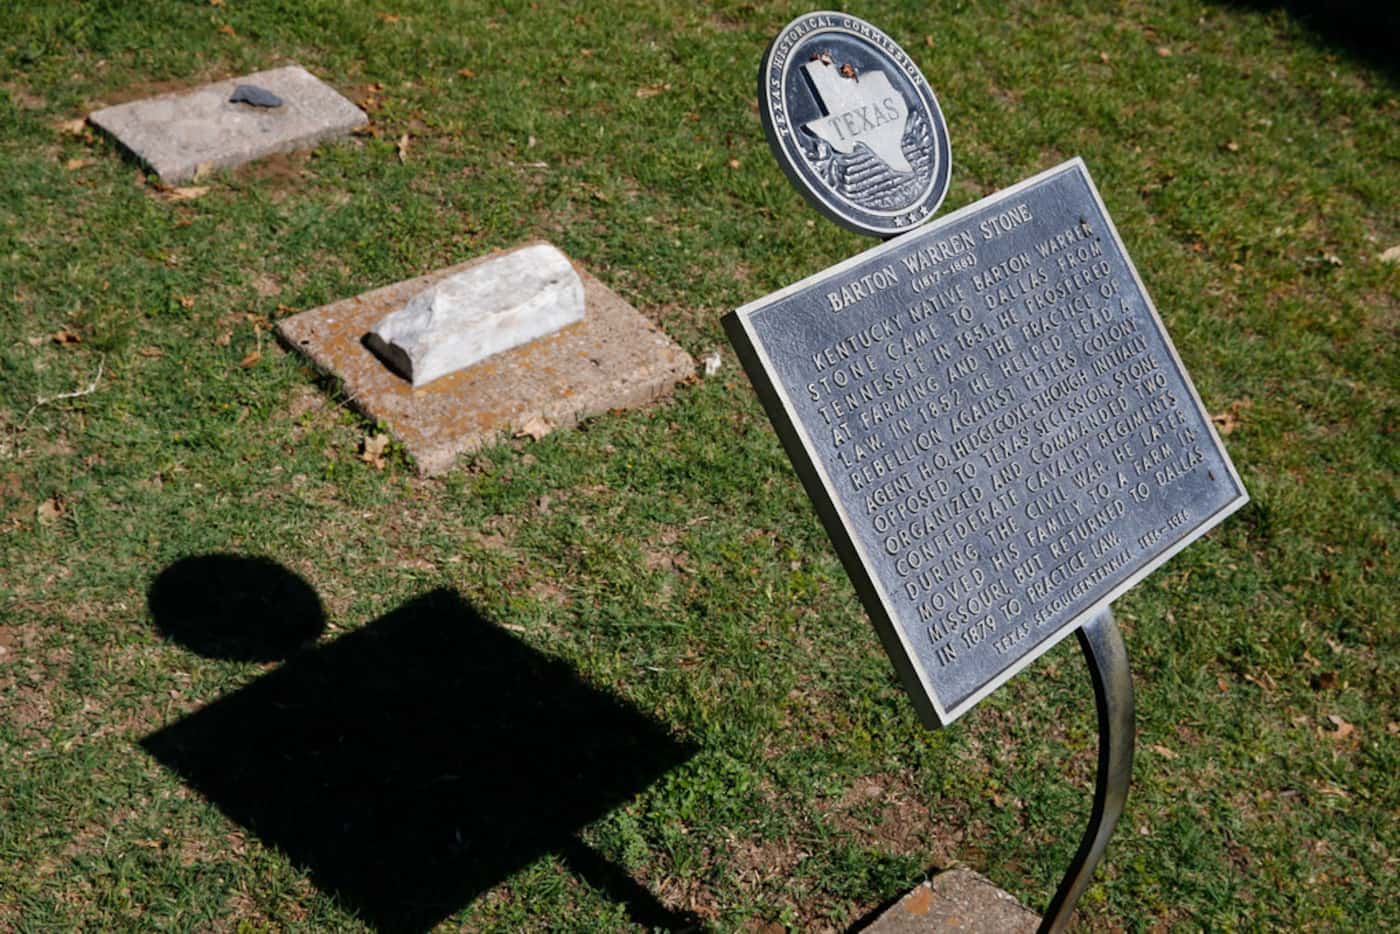 Barton Warren Stone's headstone isn't lost. It's buried beneath Dallas City Hall.